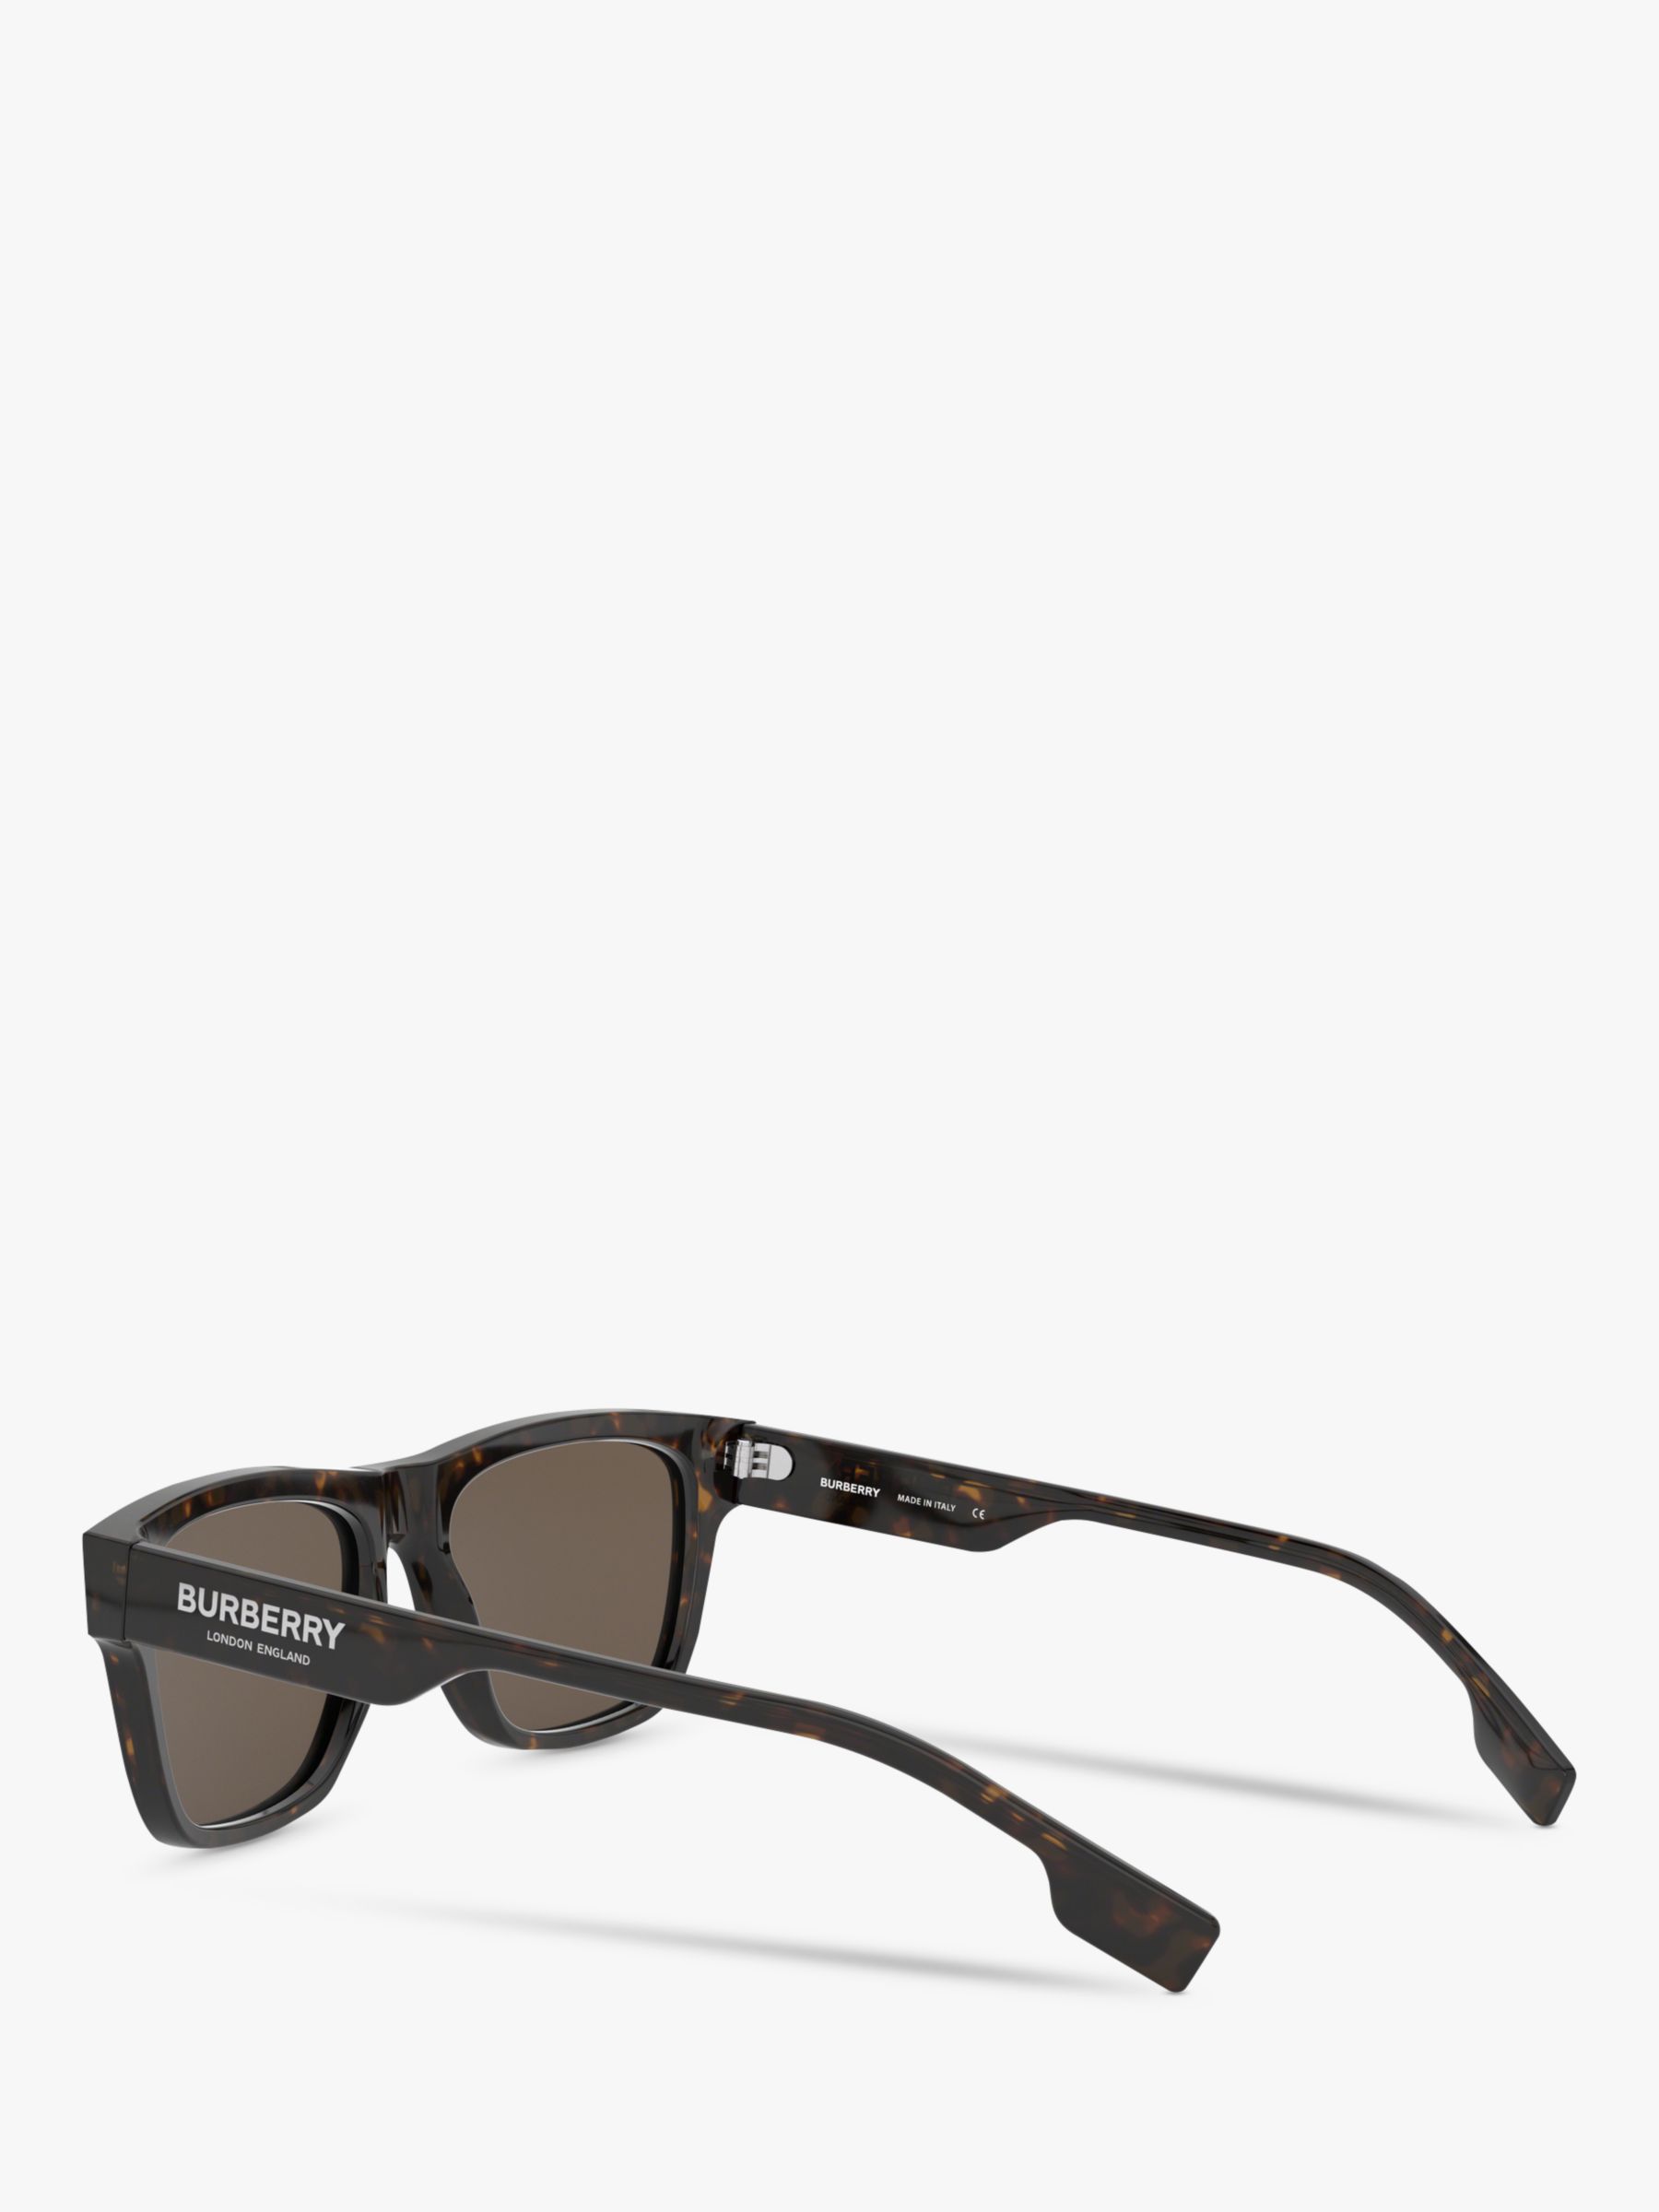 Burberry BE4293 Men's Square Sunglasses, Tortoise/Brown